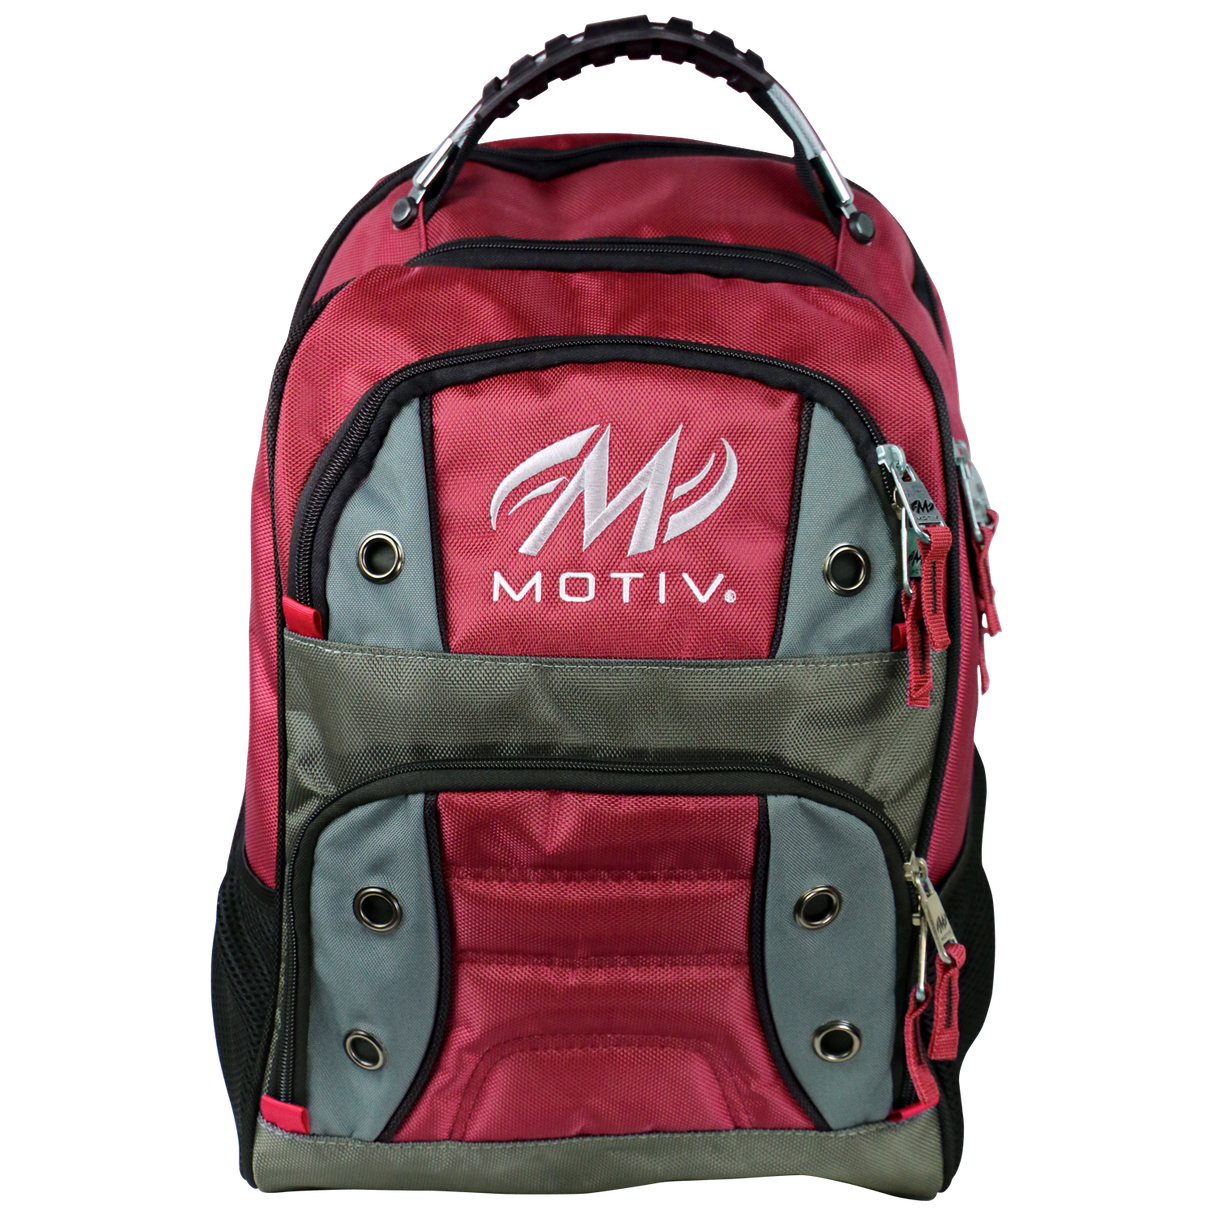 Motiv Intrepid Backpack Red suitcase league tournament play sale discount coupon online pba tour